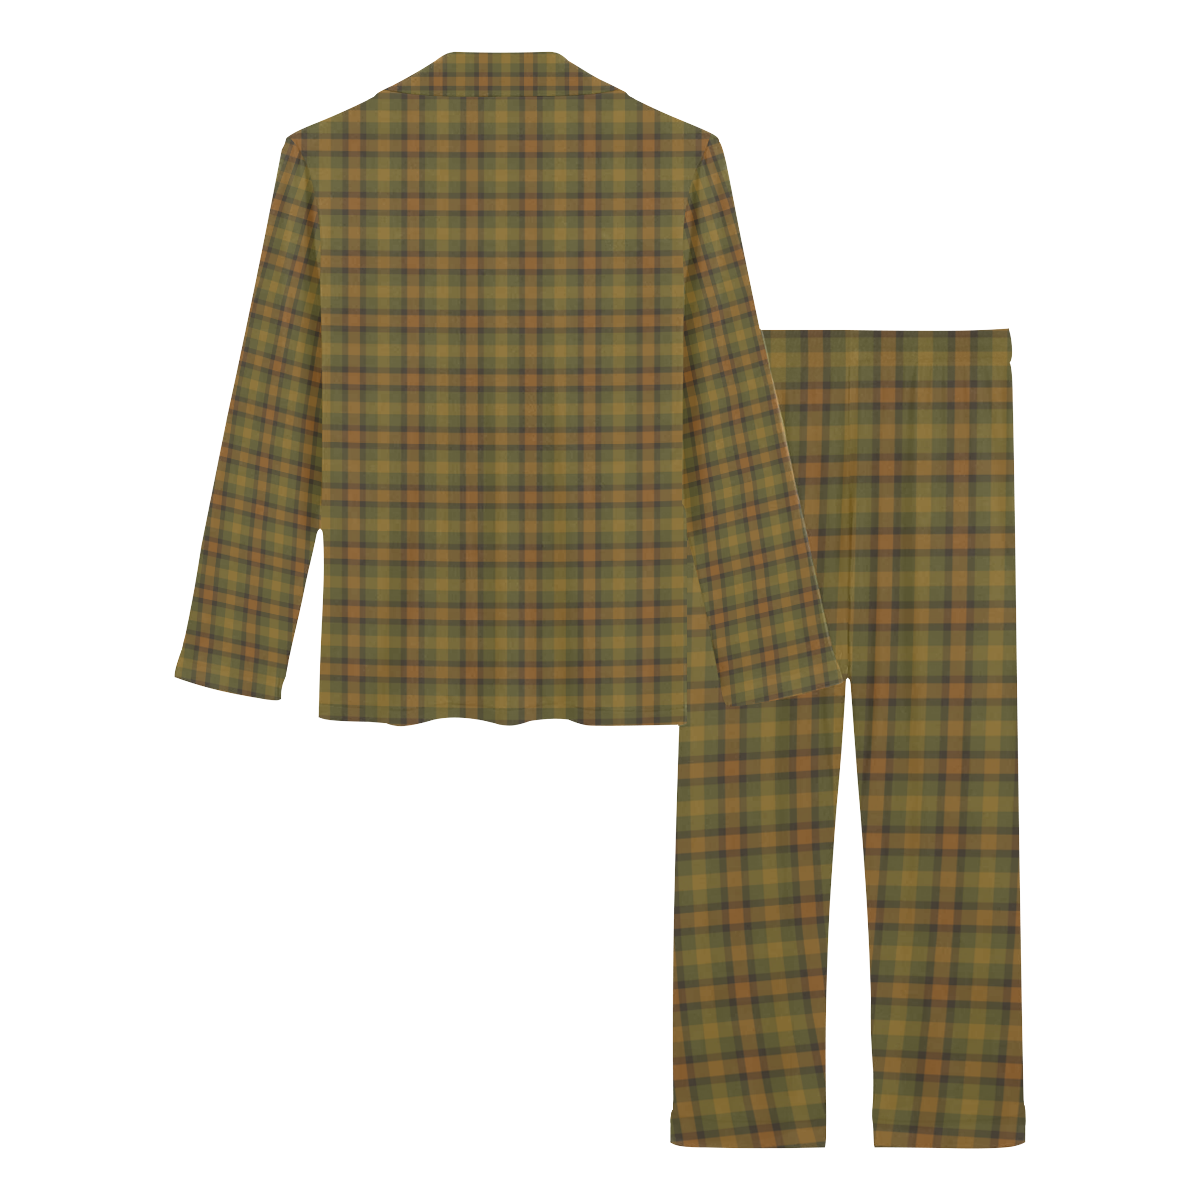 Gold Olive Plaid Women's Long Pajama Set